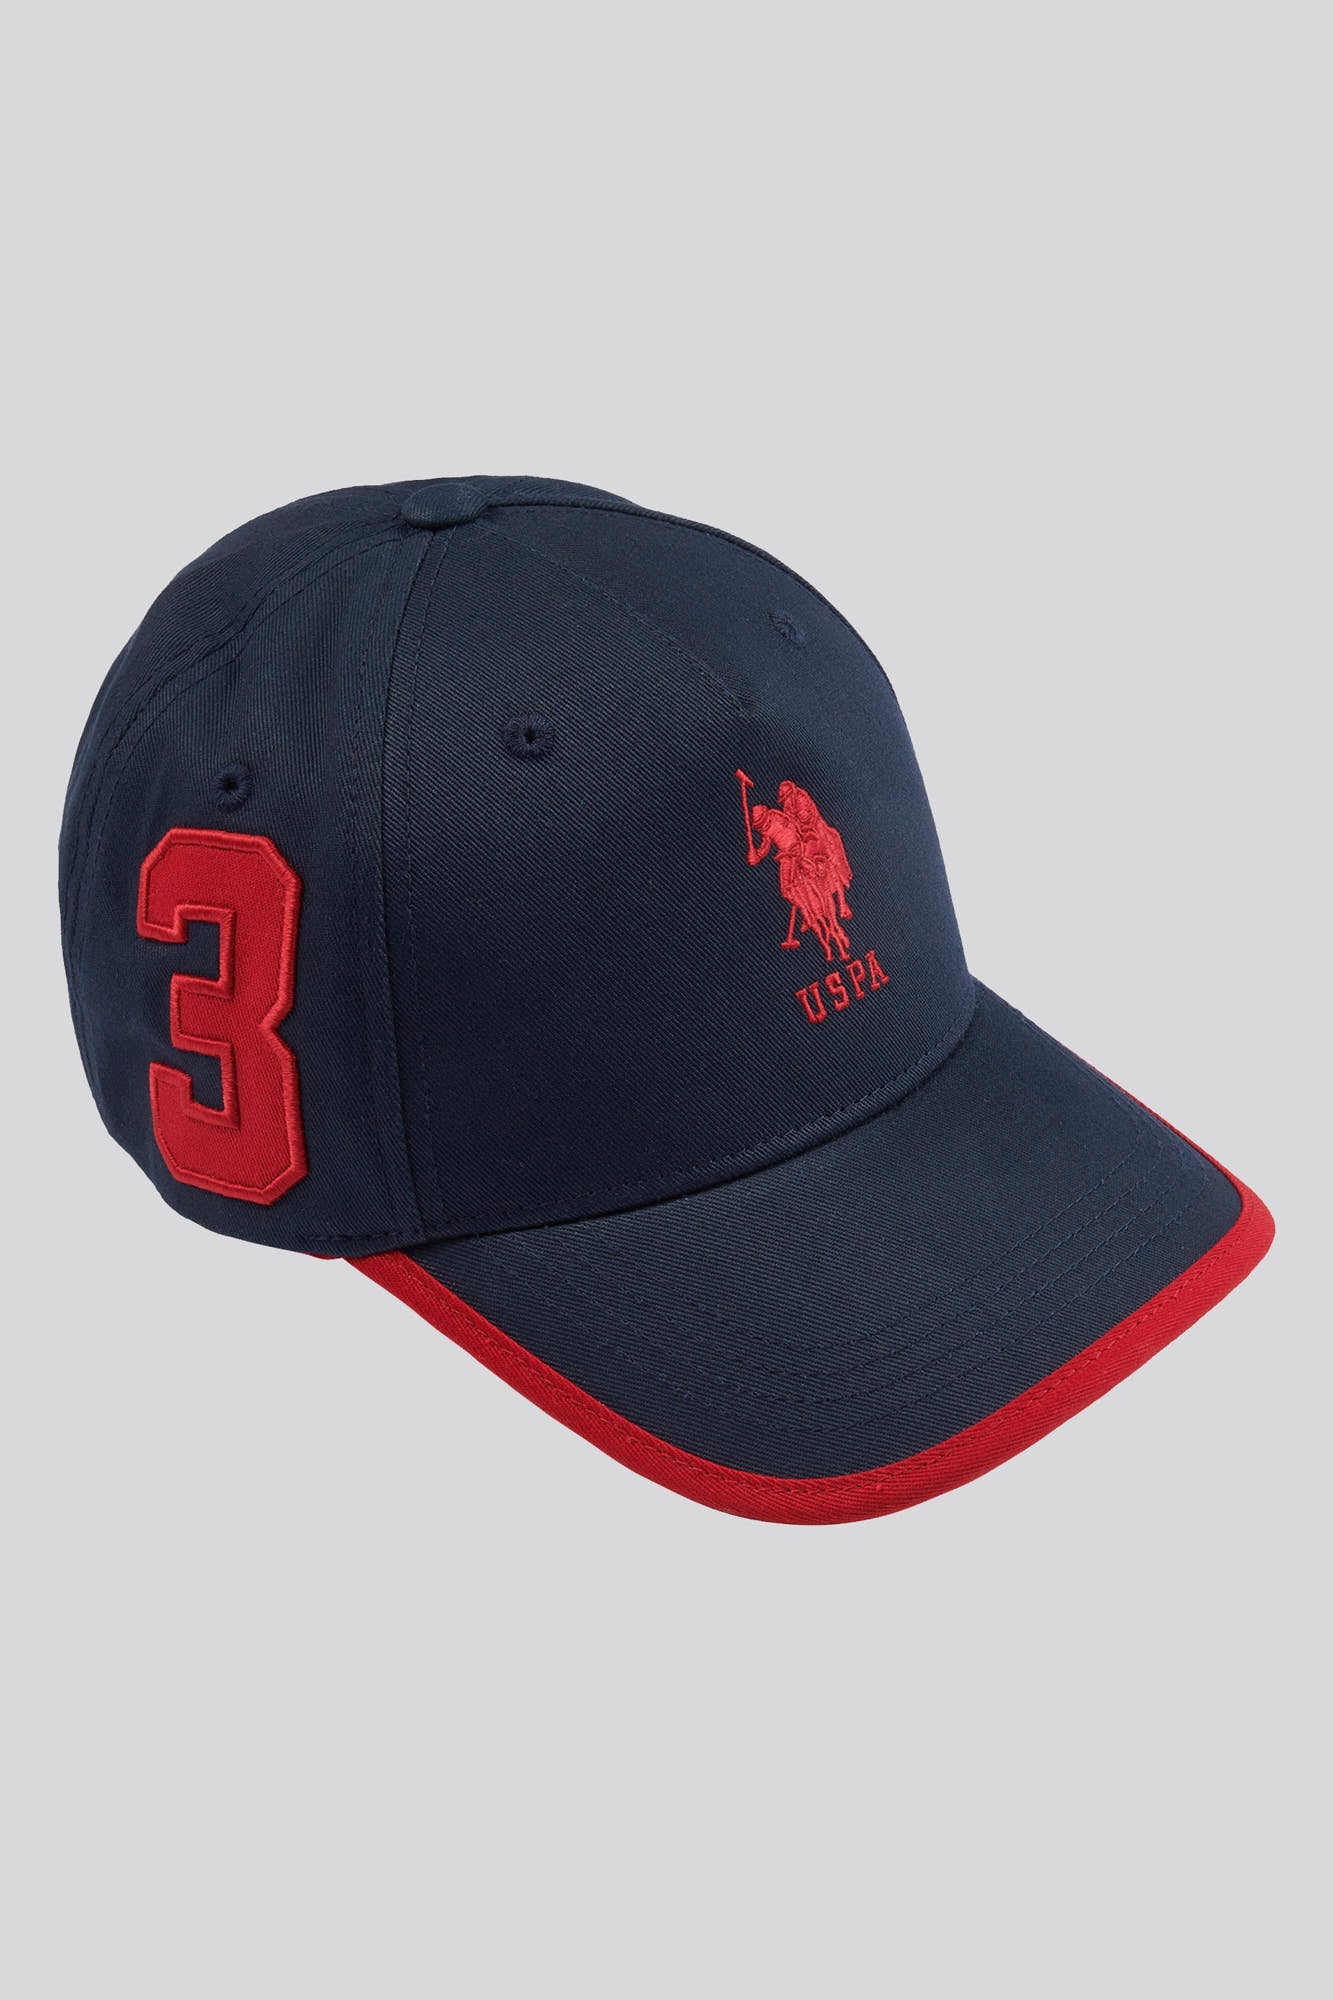 U.S. Polo Assn. Boys Player 3 Baseball Cap in Dark Sapphire Navy / Haute Red DHM